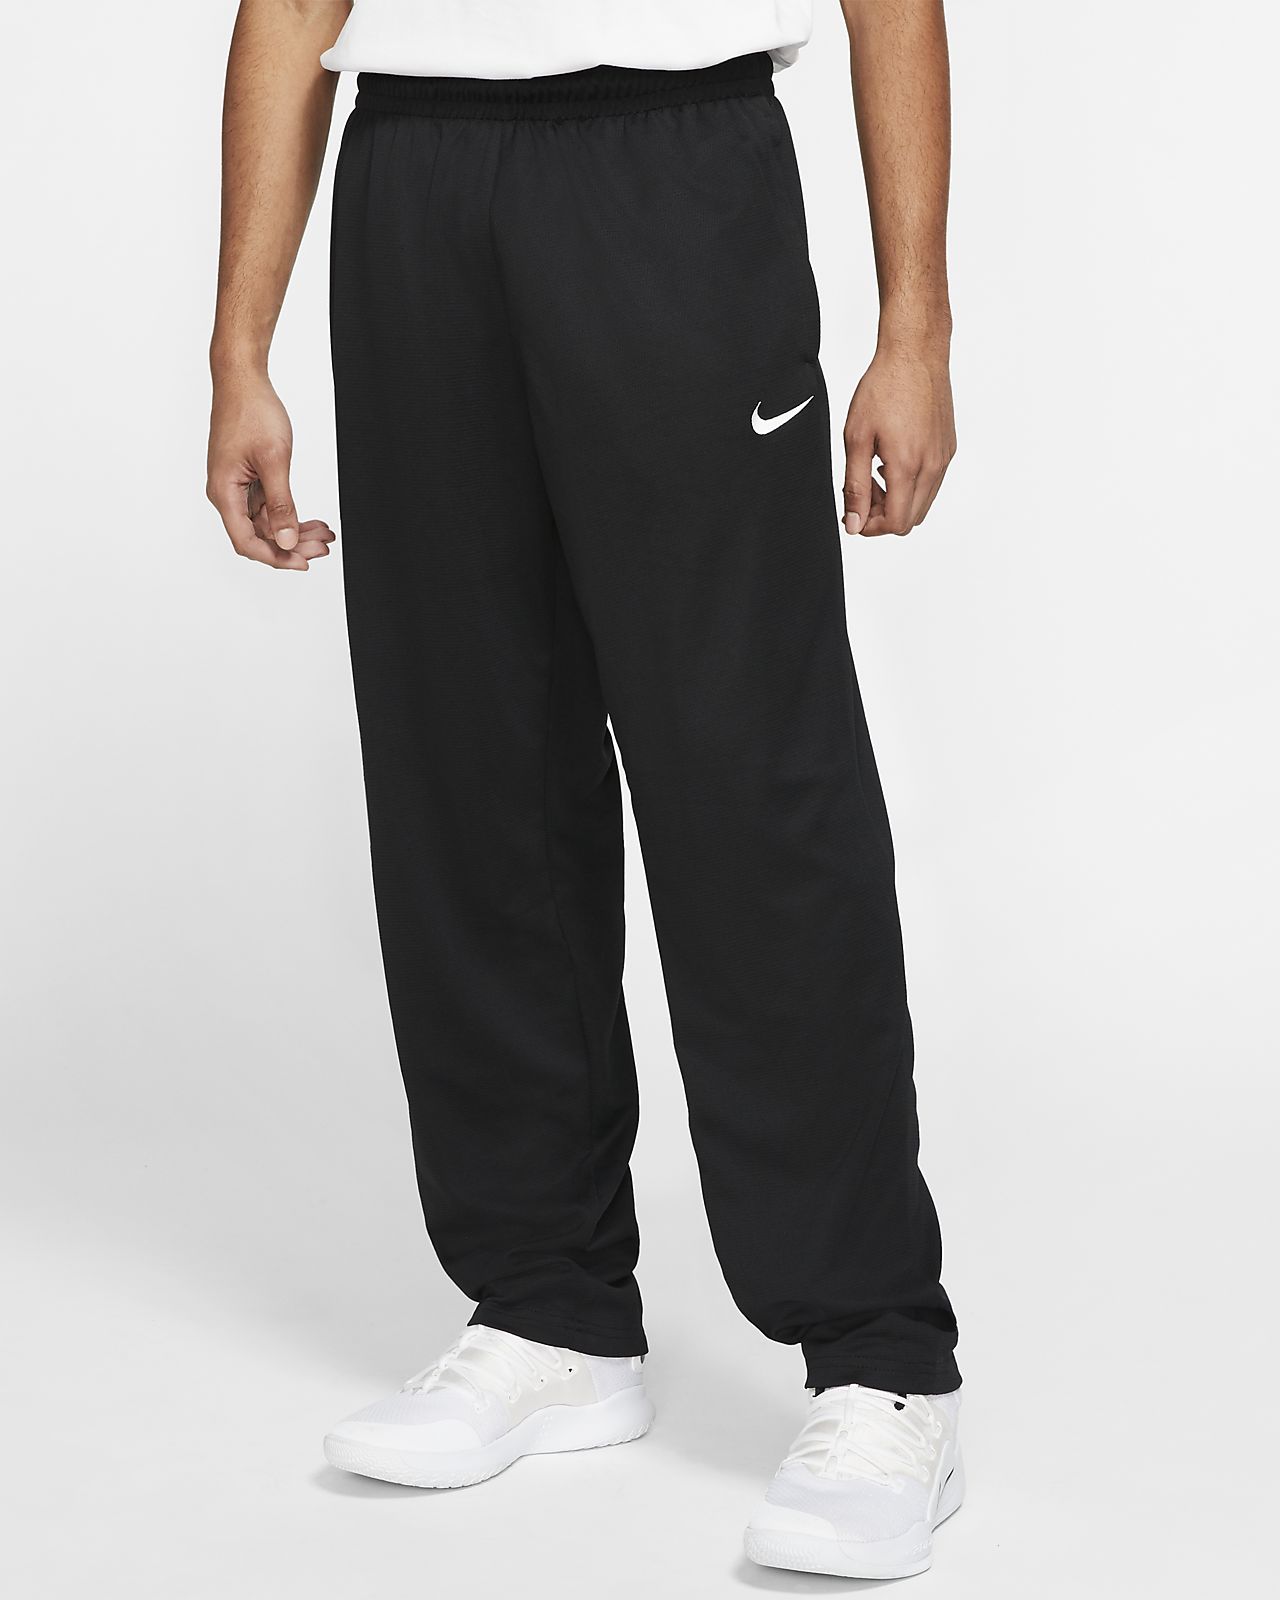 Nike Dry Rivalry Pants - acclaimedmoms